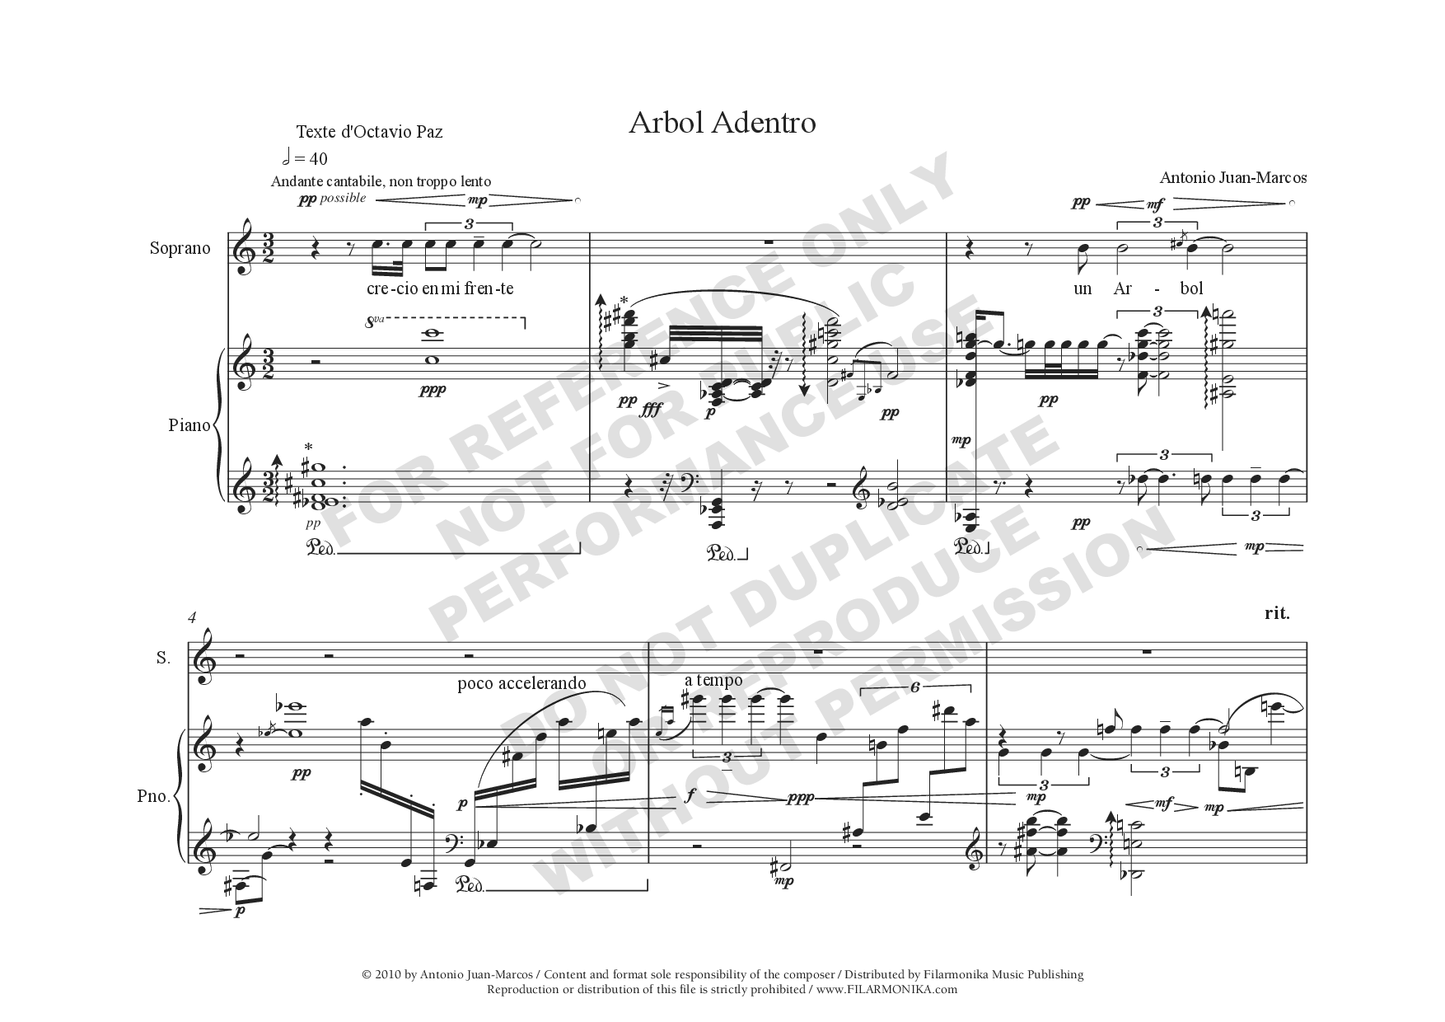 Árbol adentro, for soprano and piano